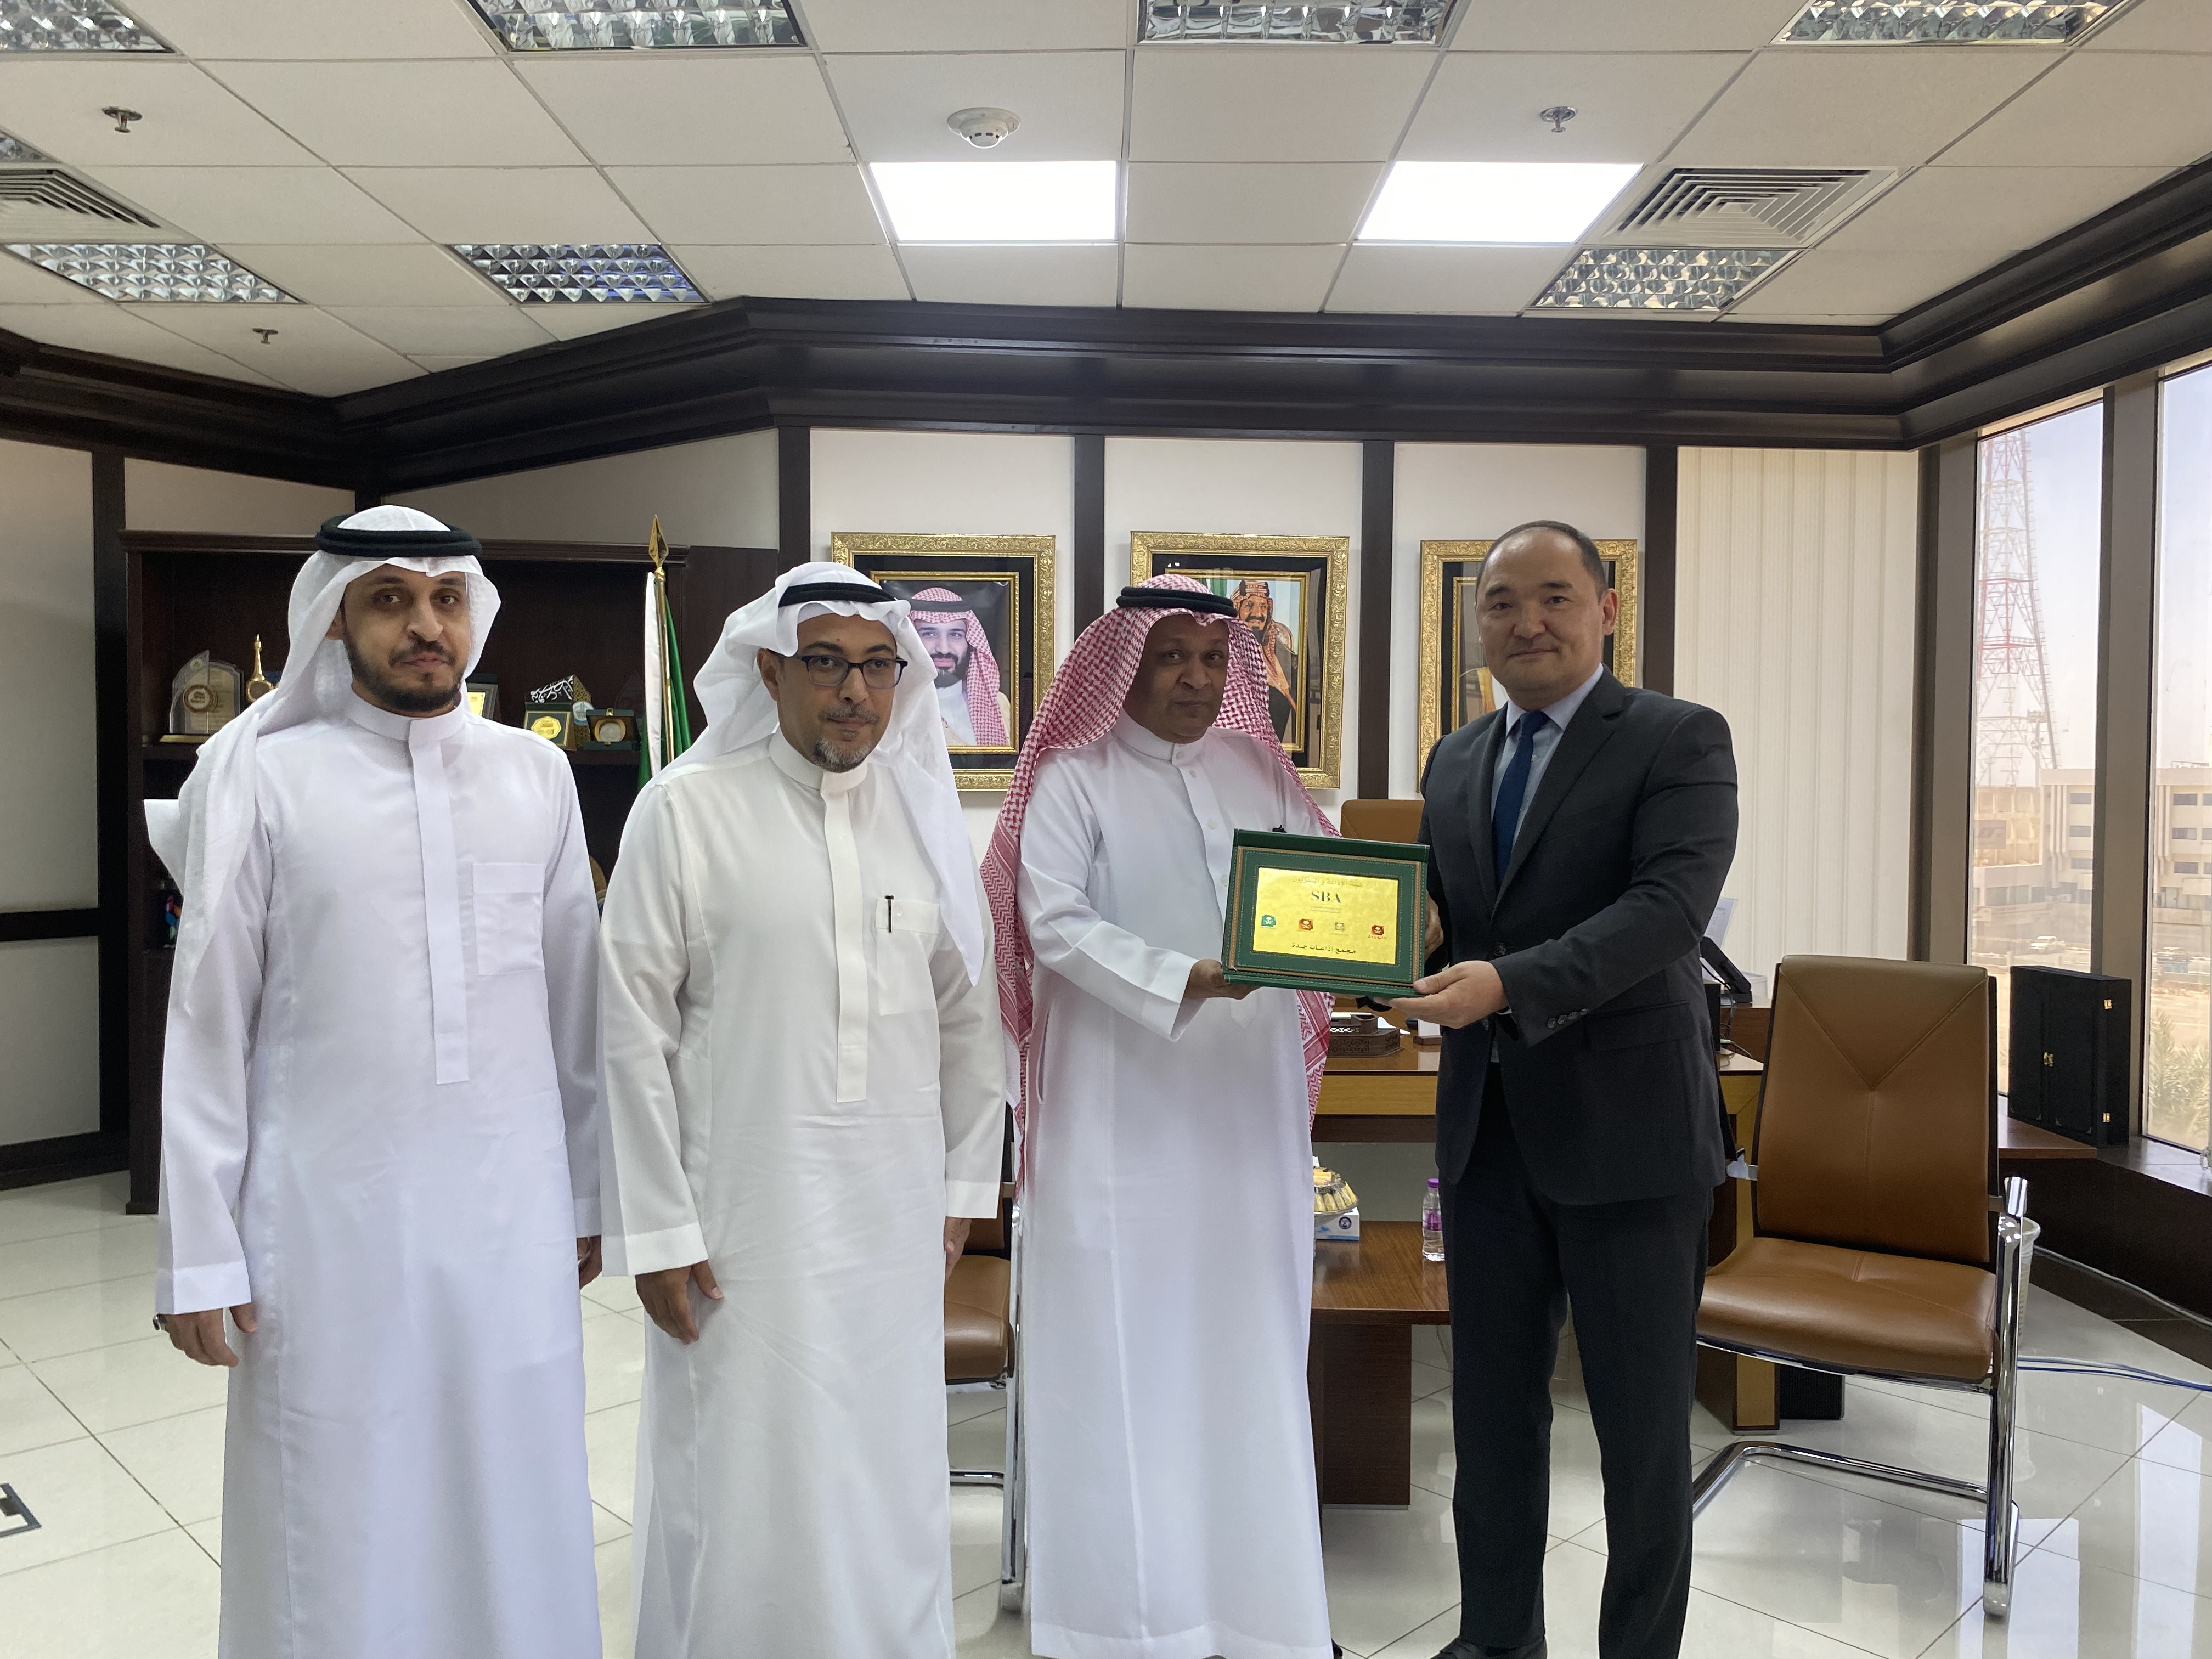 Jeddah Radio Shows Interest in Establishing Ties with Kazakhstan